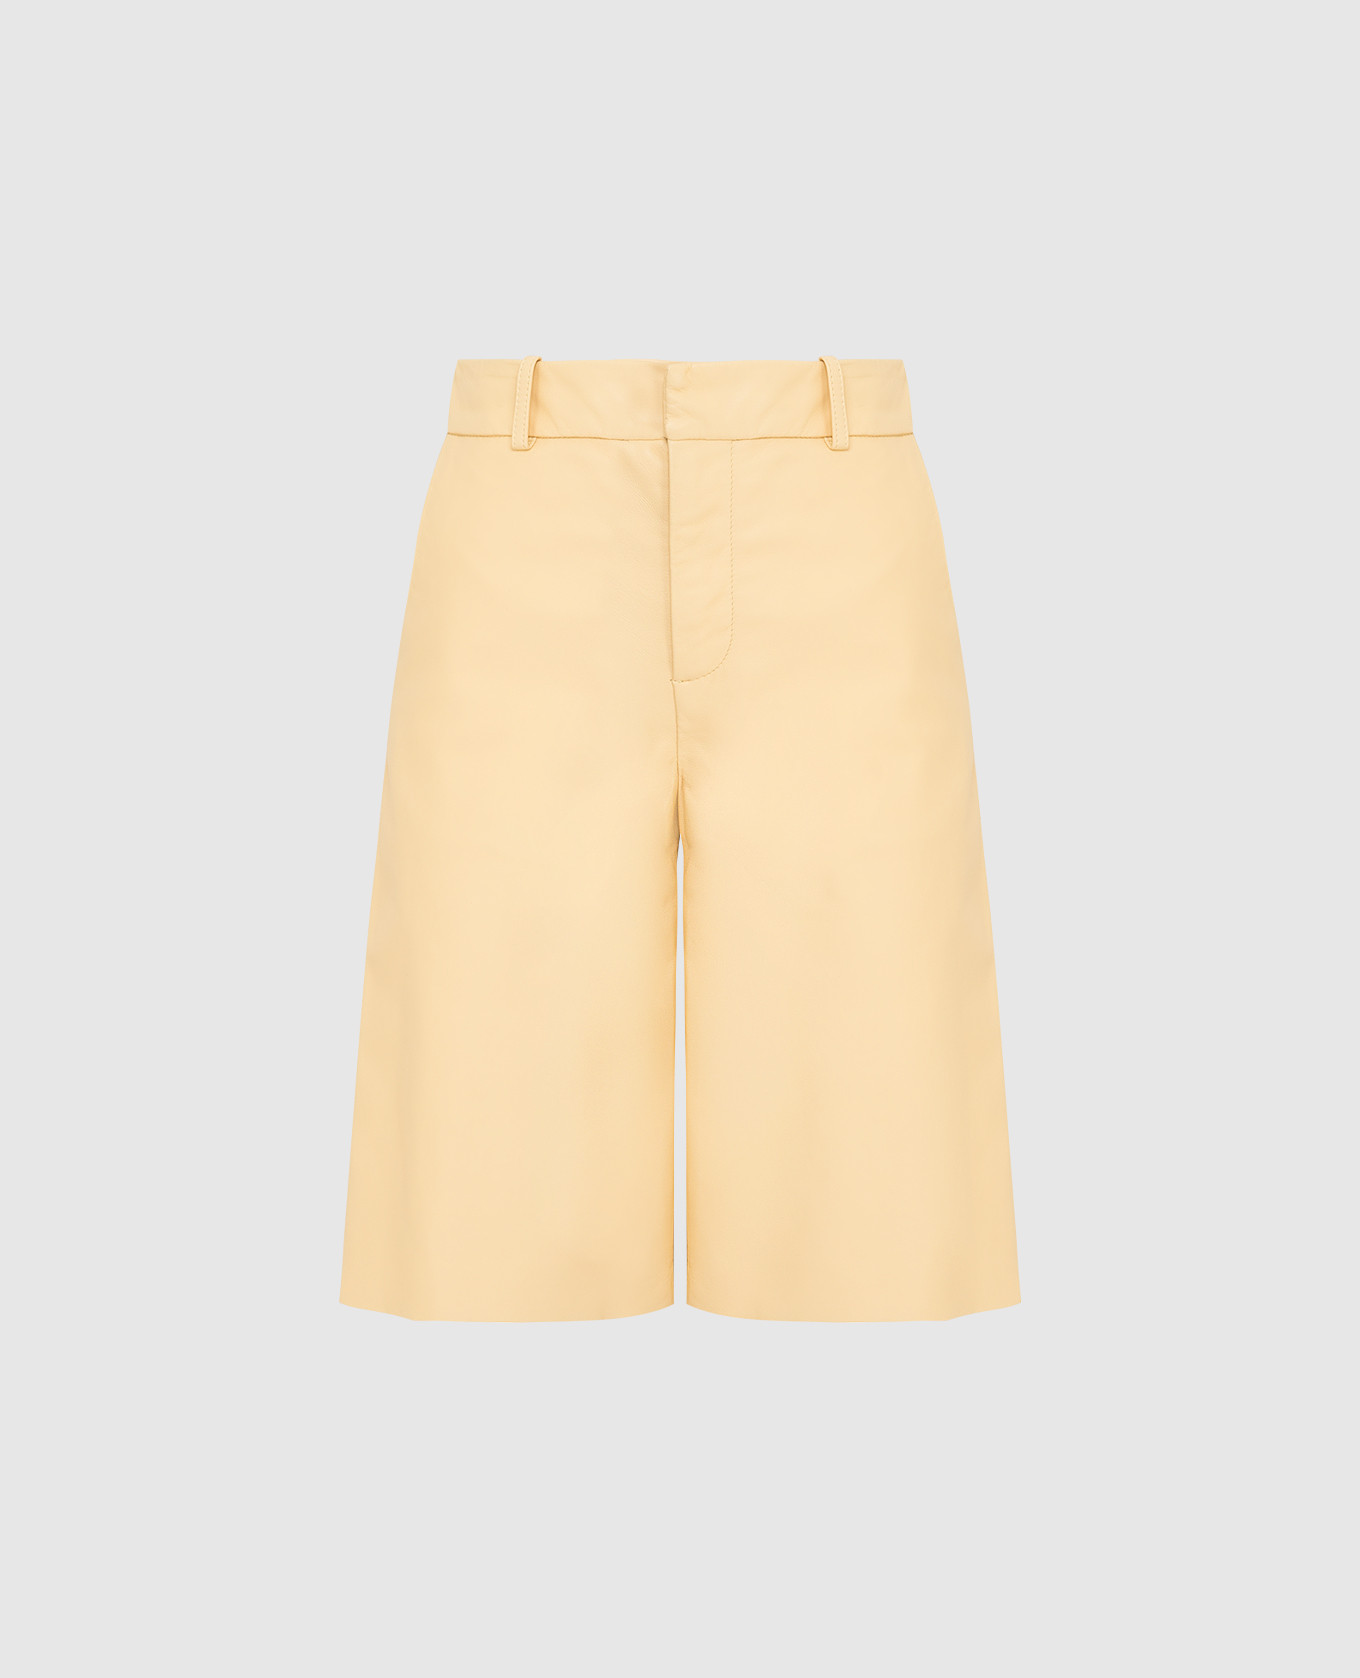 Yellow leather bermuda shorts